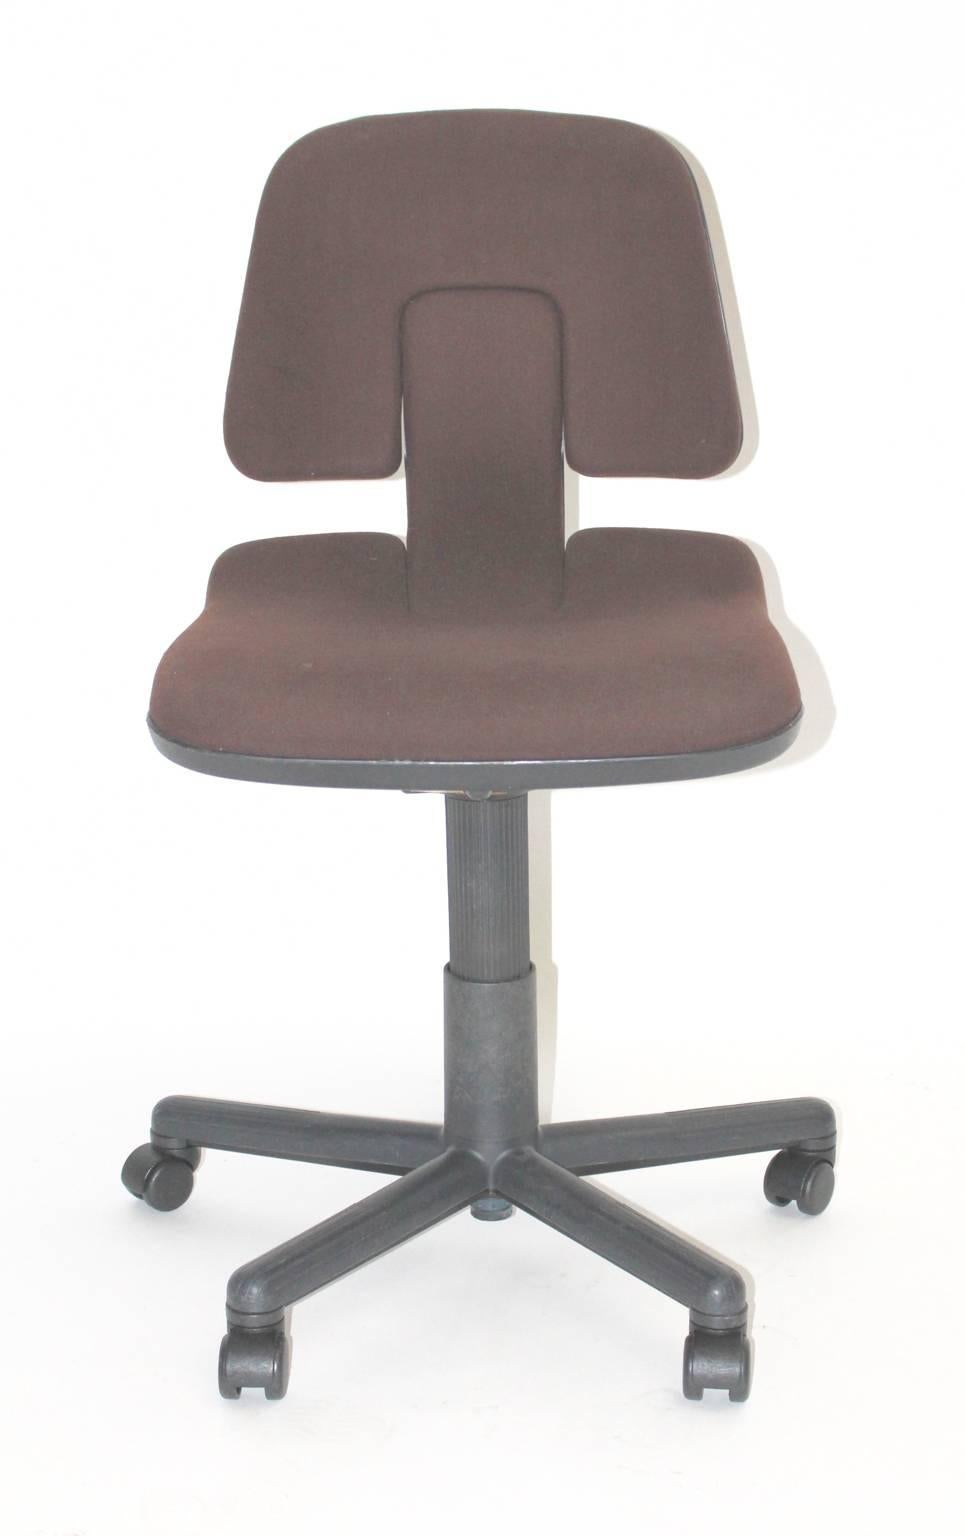 Mid-Century Modern Office Chair Vintage Vitramat by Wolfgang Mueller Deisig 1976 Vitra Switzerland For Sale